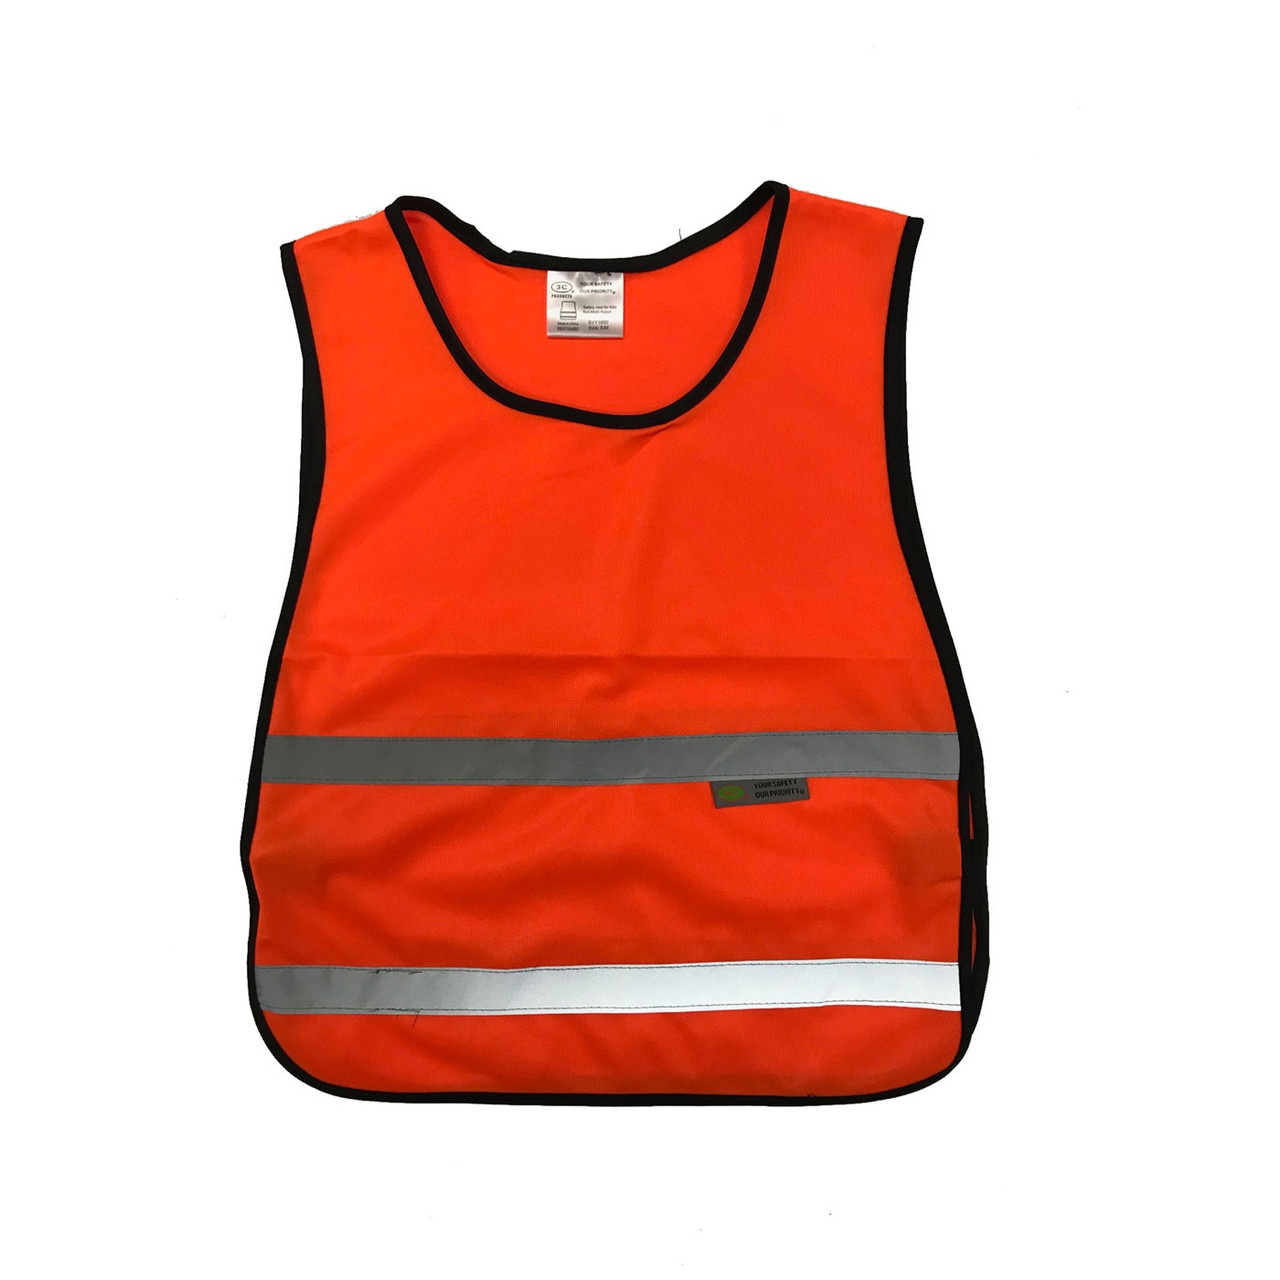 Trottoir Trechter webspin Persona Non-ANSI Orange Poly Tricot Youth Kids Safety Vest SVY1600